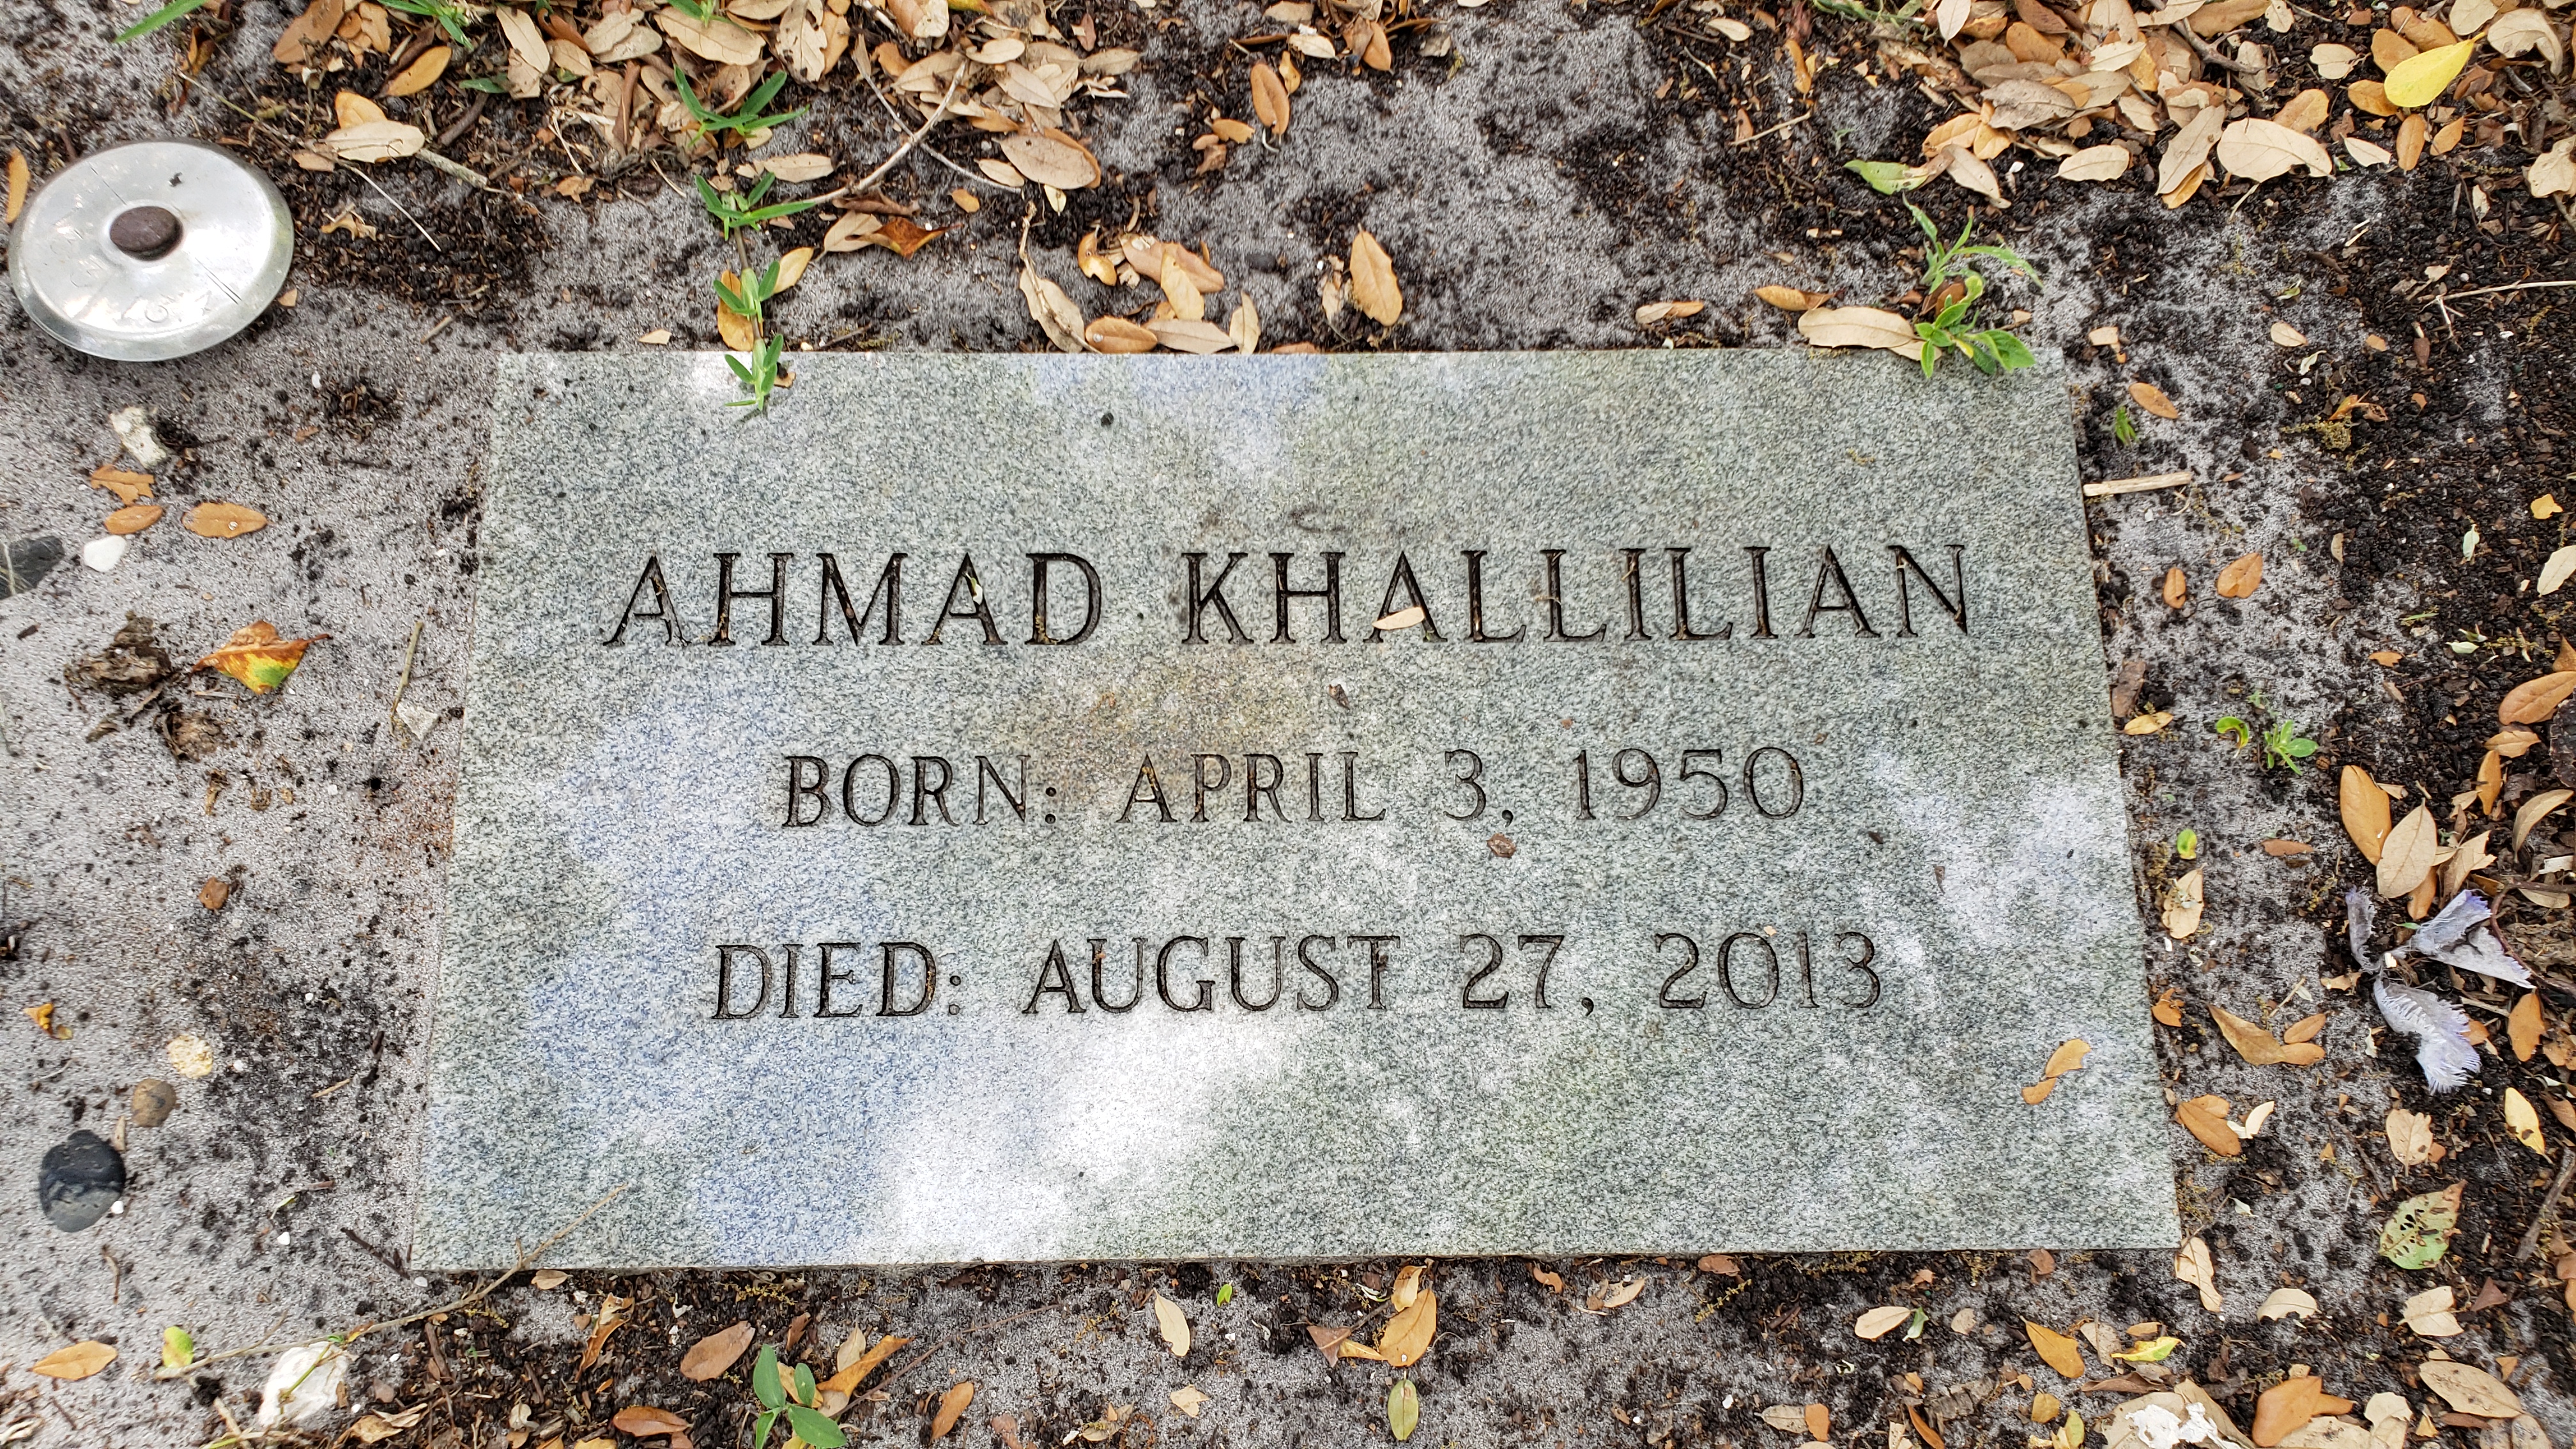 Ahmad Khallilian